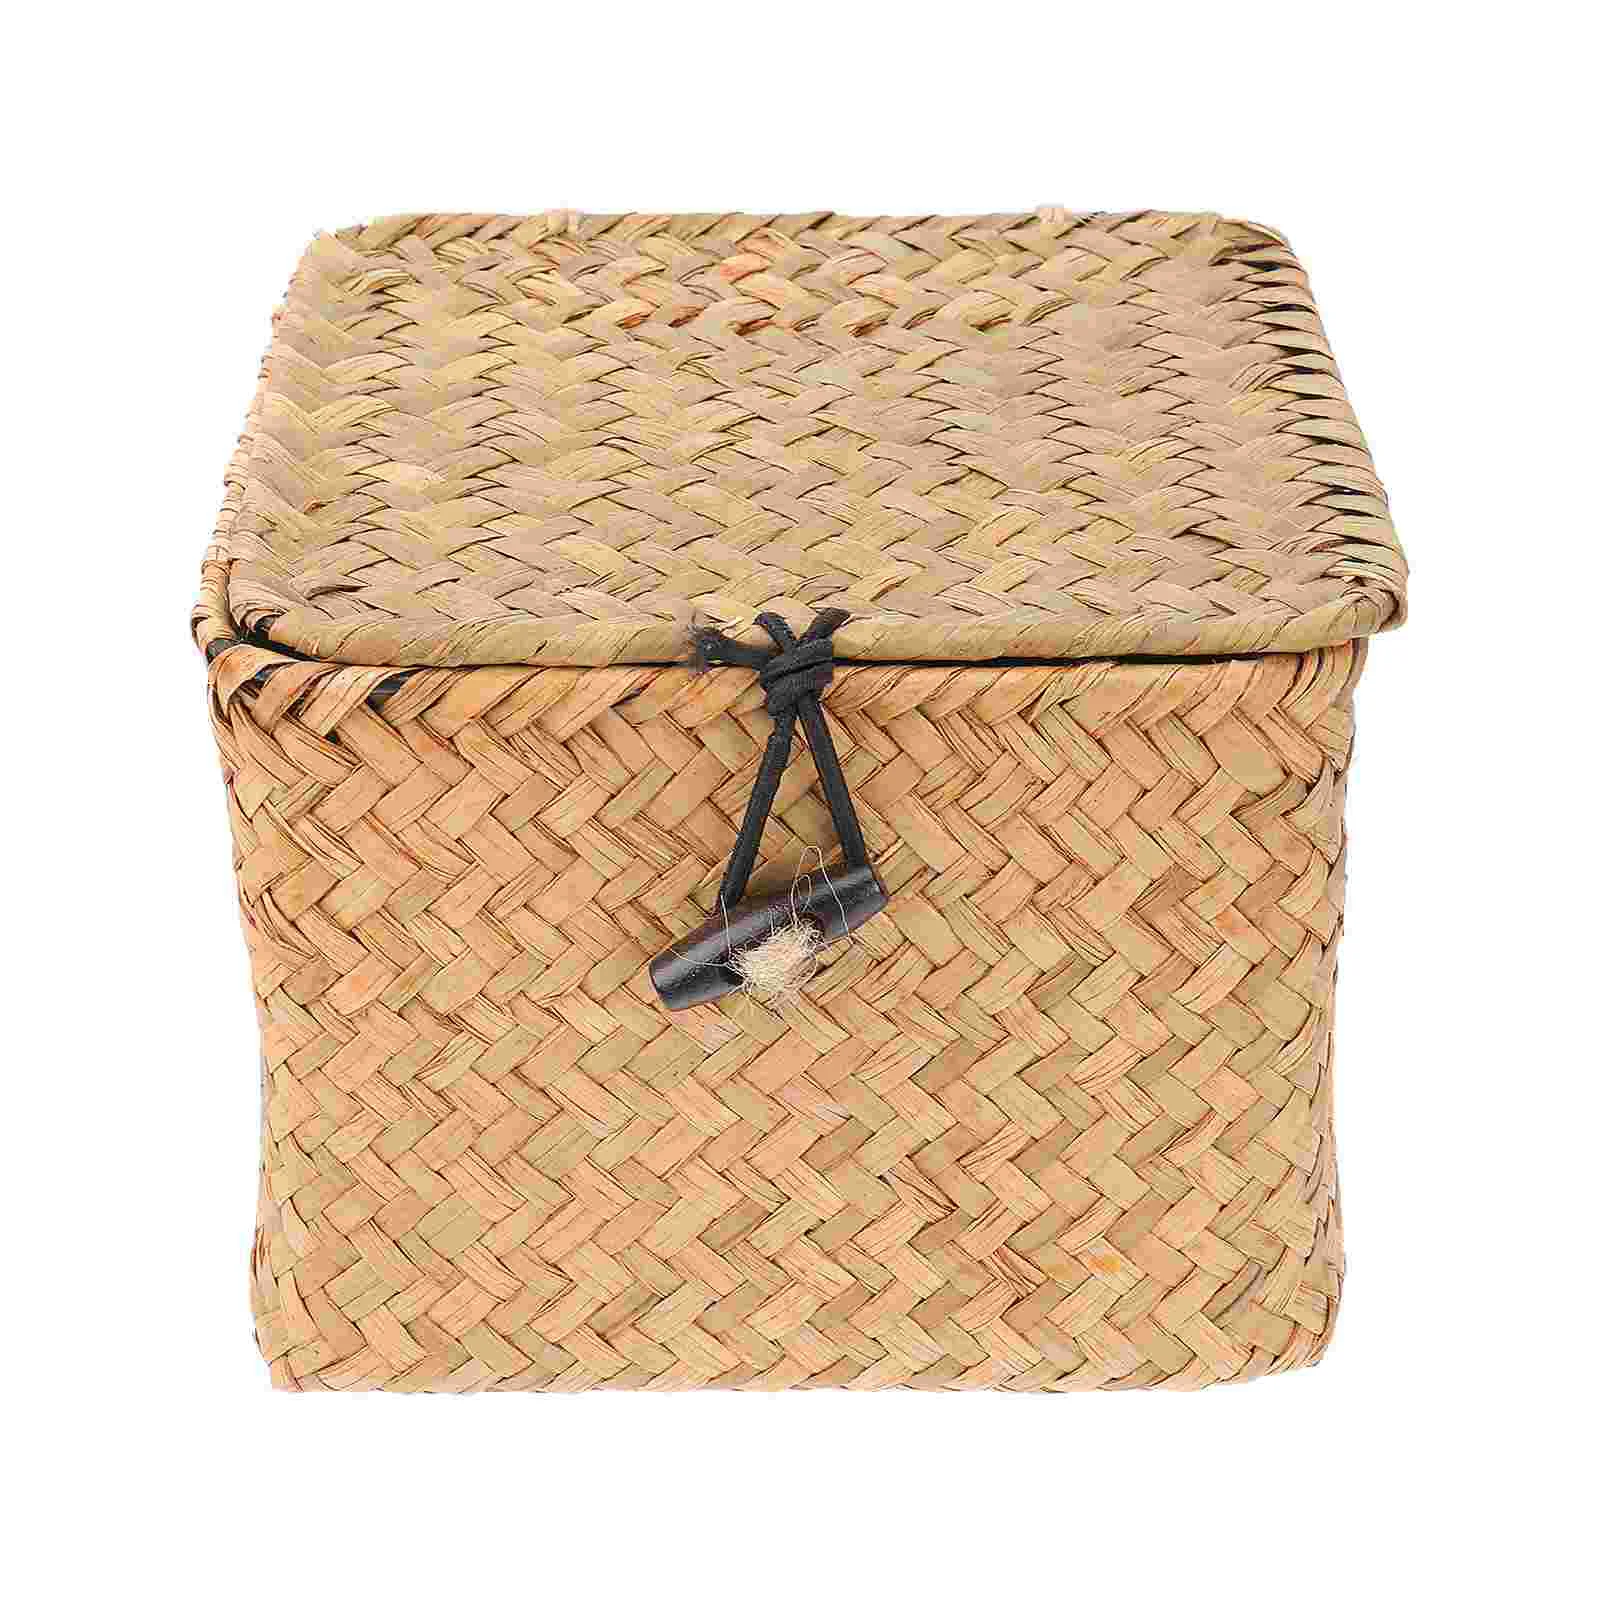 

Basket Storage Woven Boxstraw Baskets Lid Wicker Seagrass Organizer Rattan Bins Tea Lids Seaweed Hyacinth Handwoven Makeup